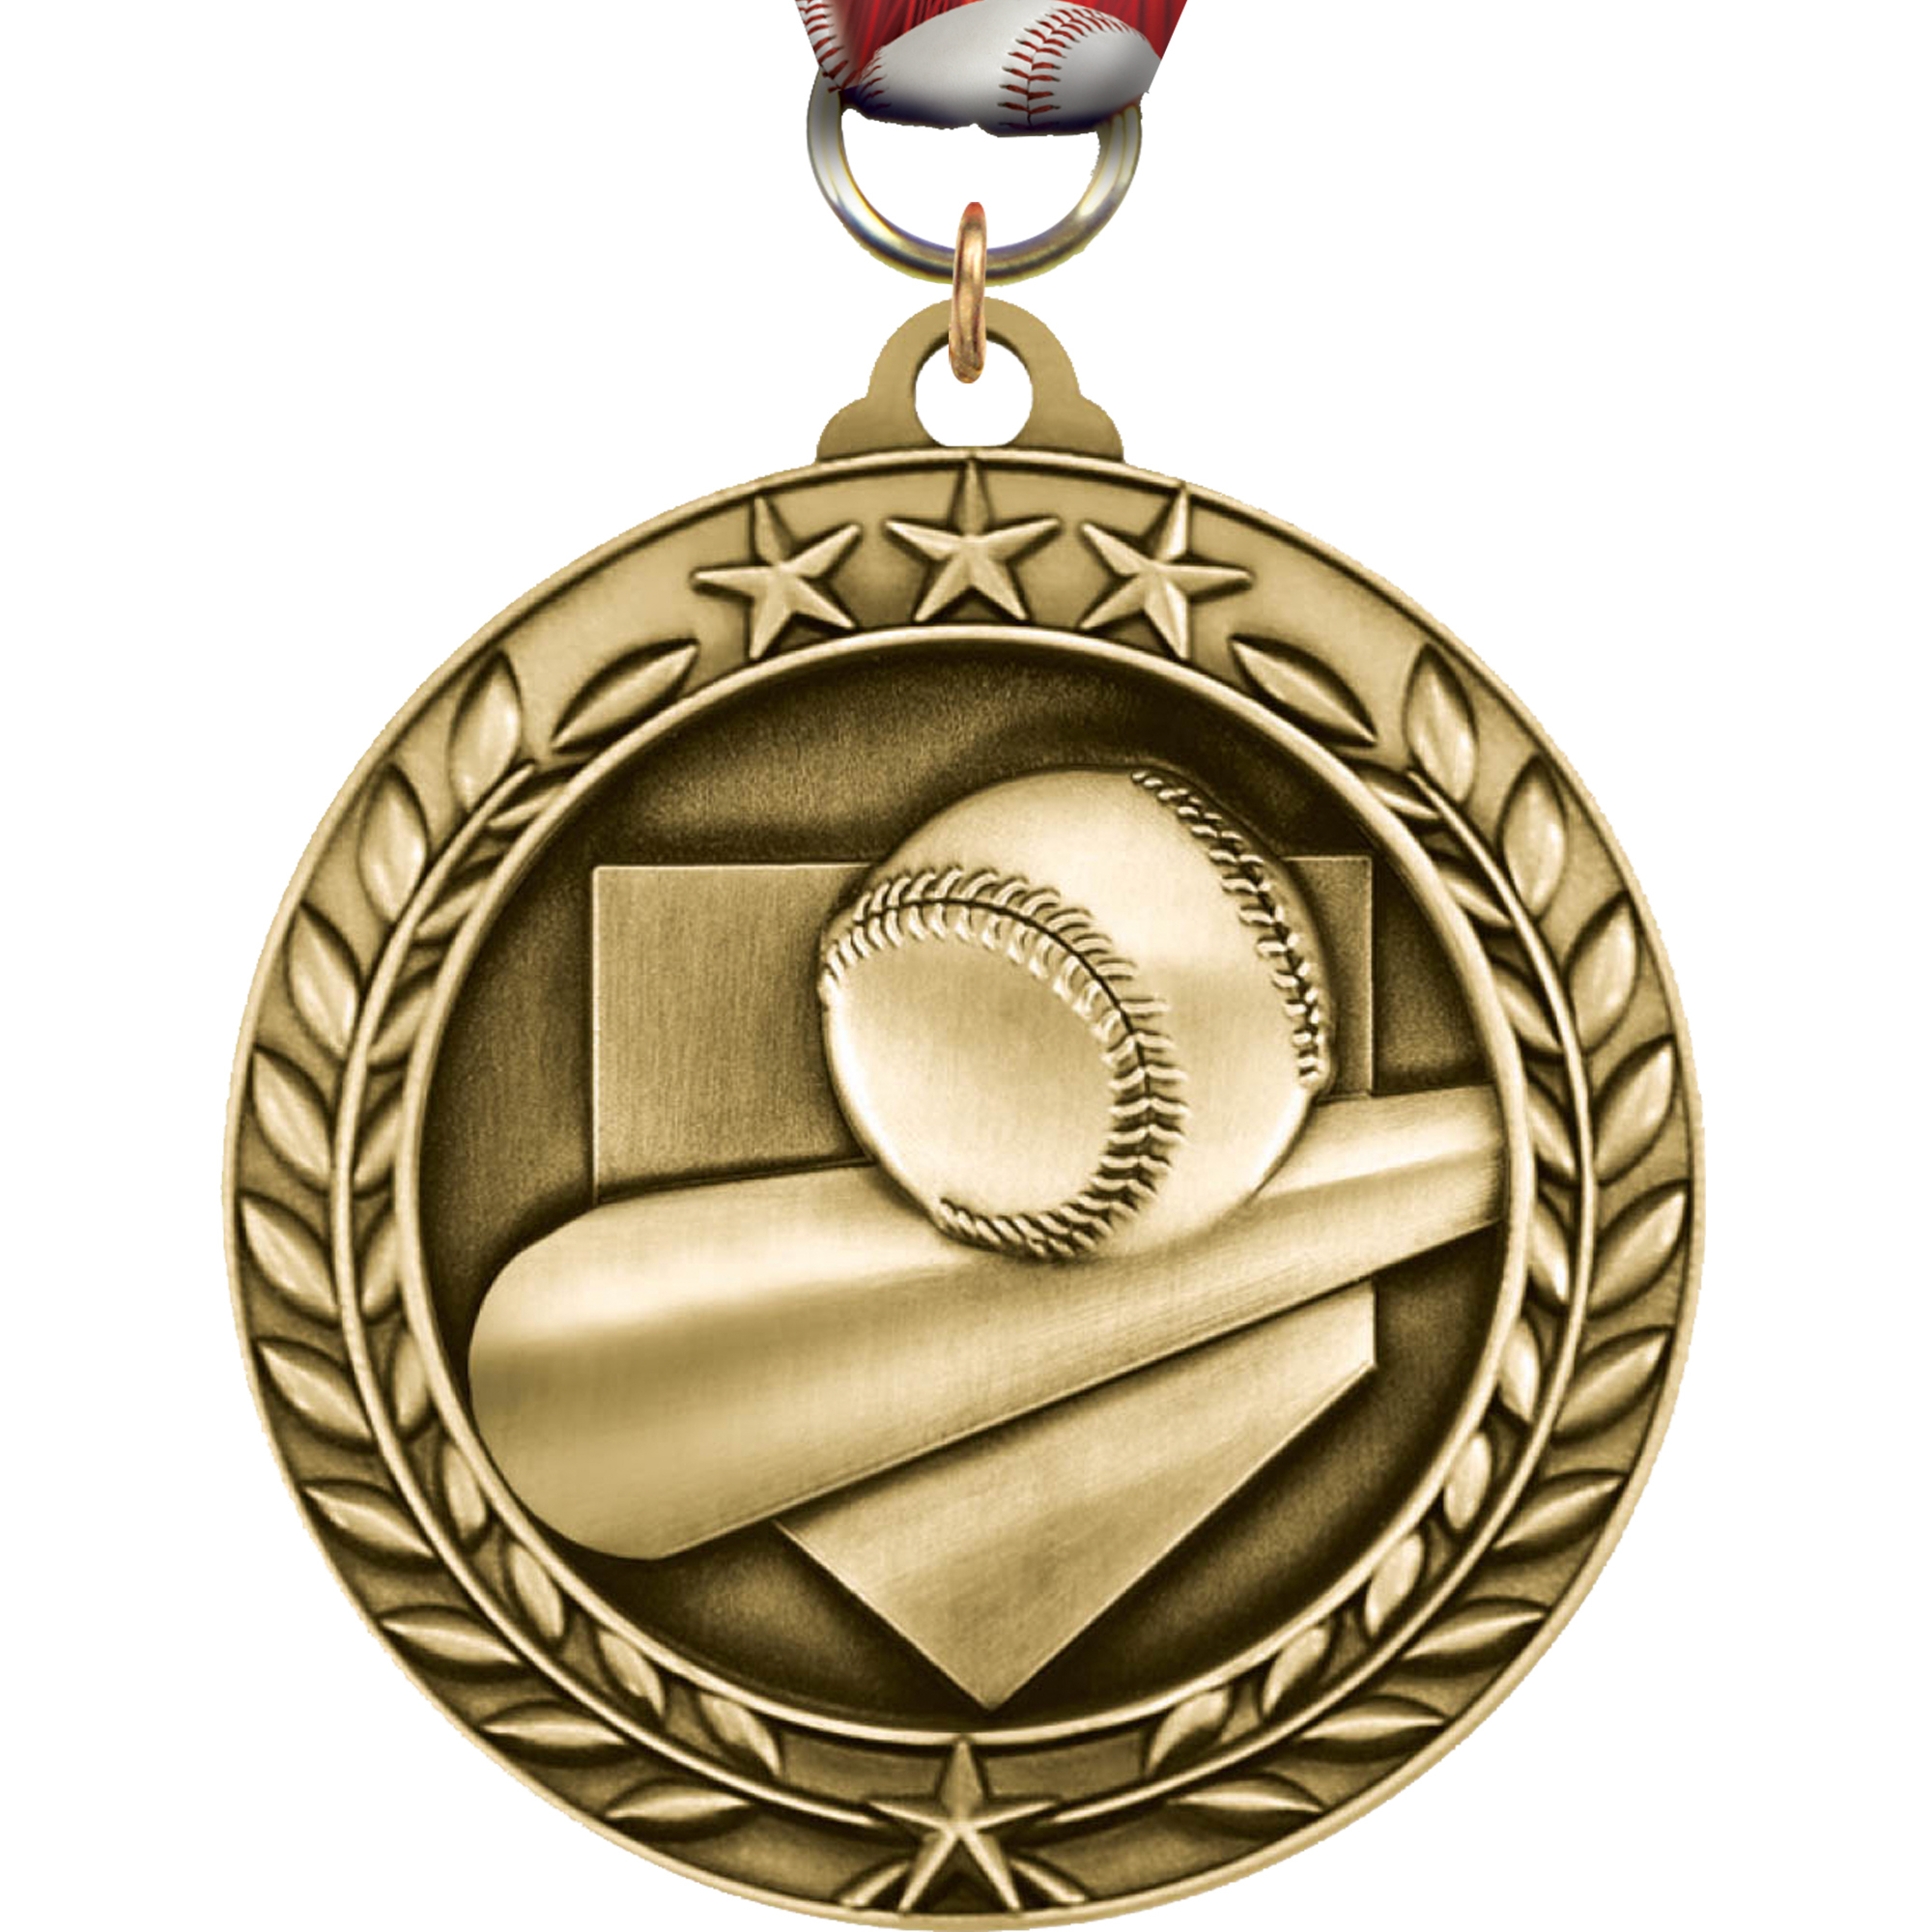 Baseball 1.75 inch Dimensional Medal